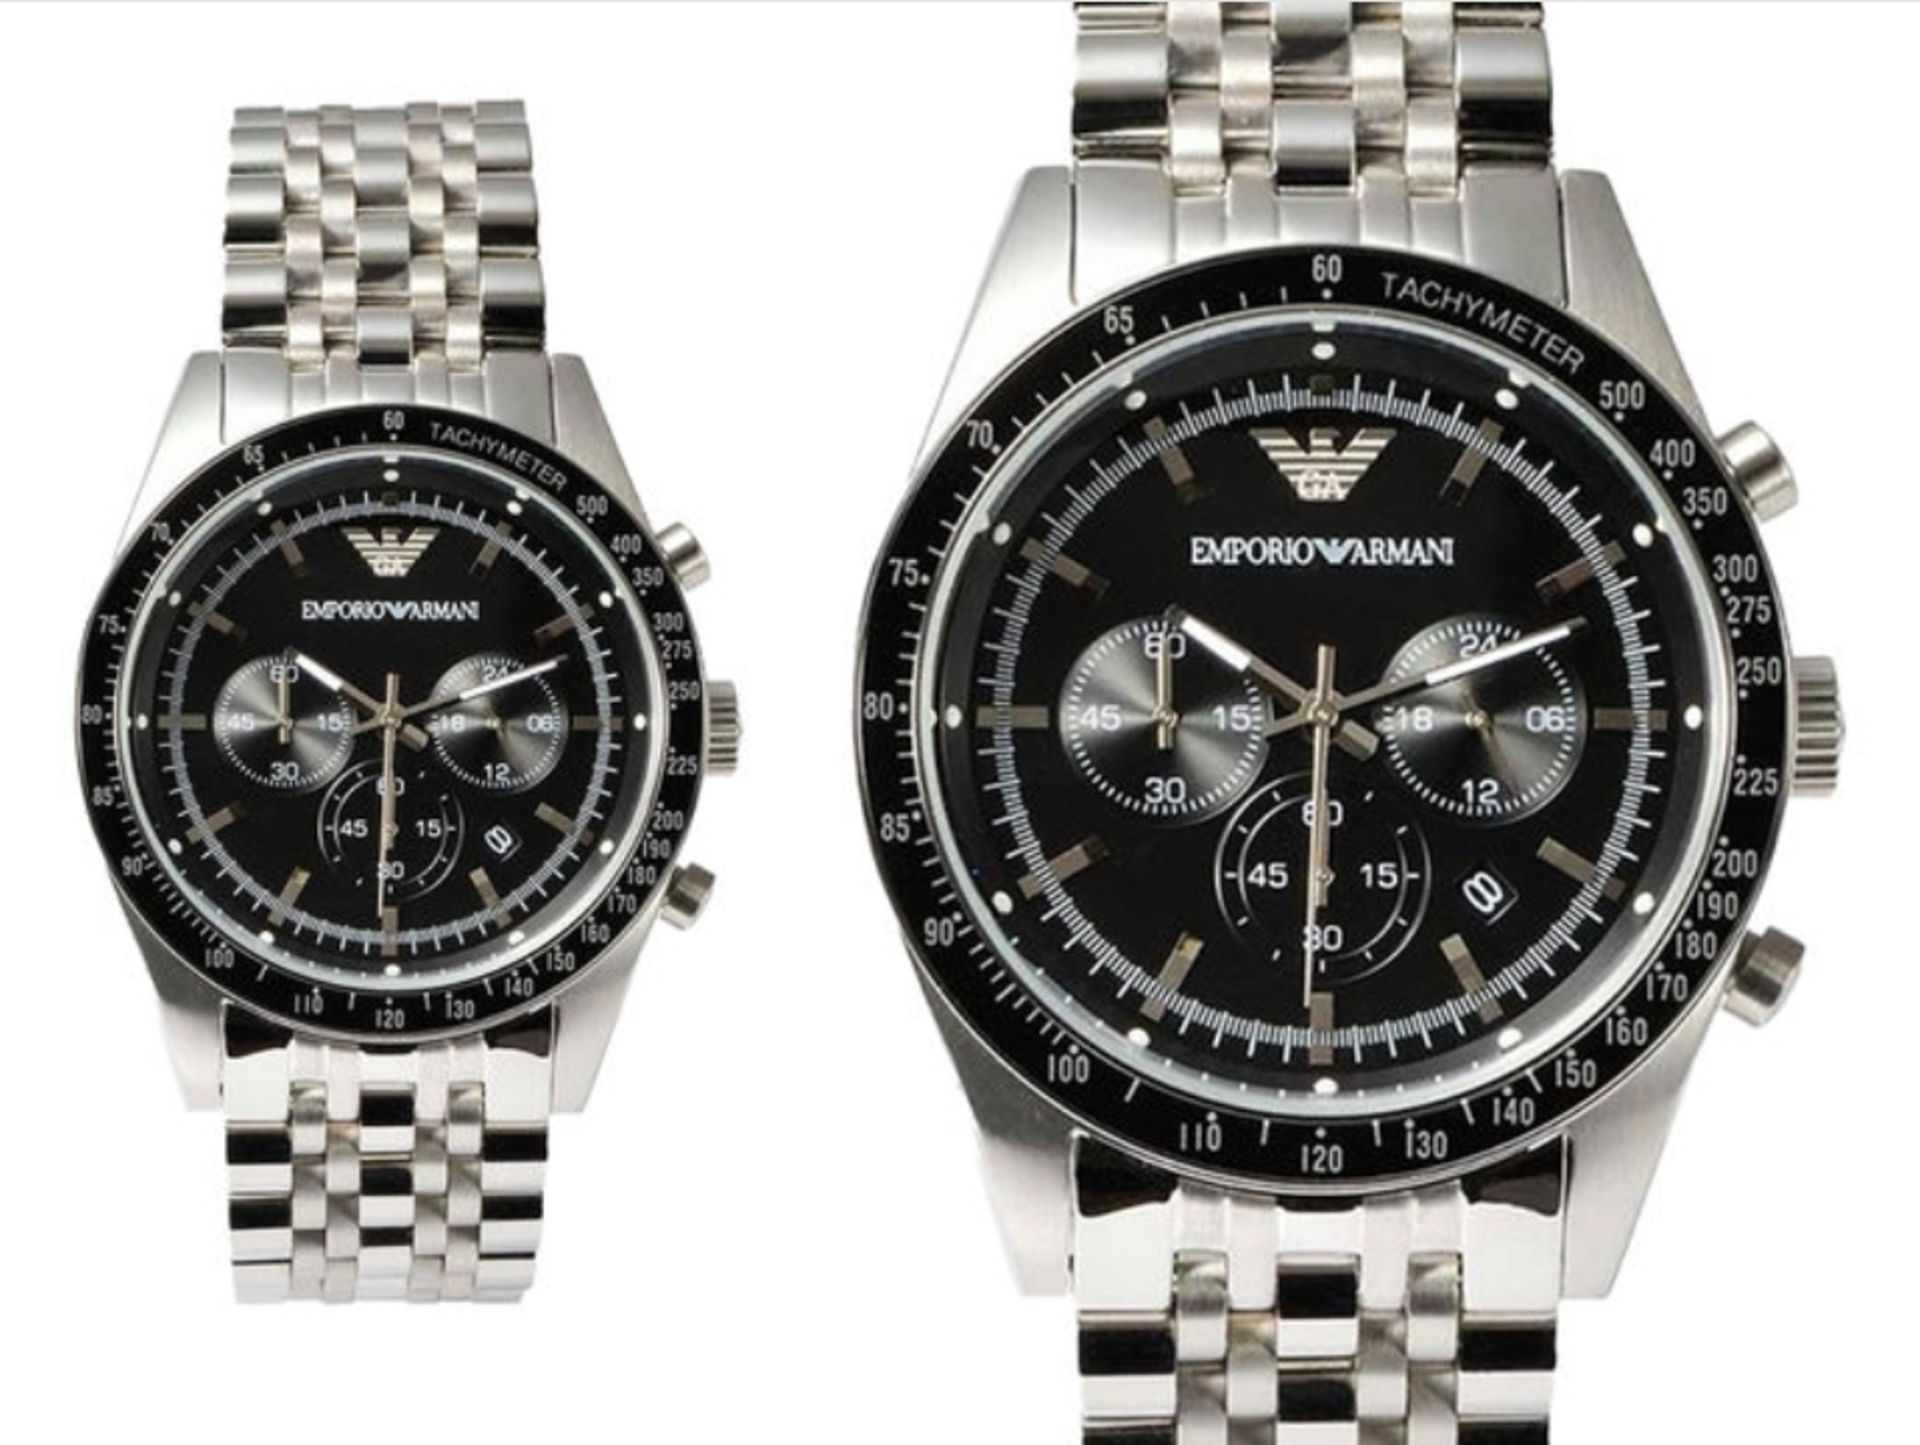 Emporio Armani AR5988 Men's Tazio Black Dial Silver Bracelet Chronograph Watch - Image 7 of 8